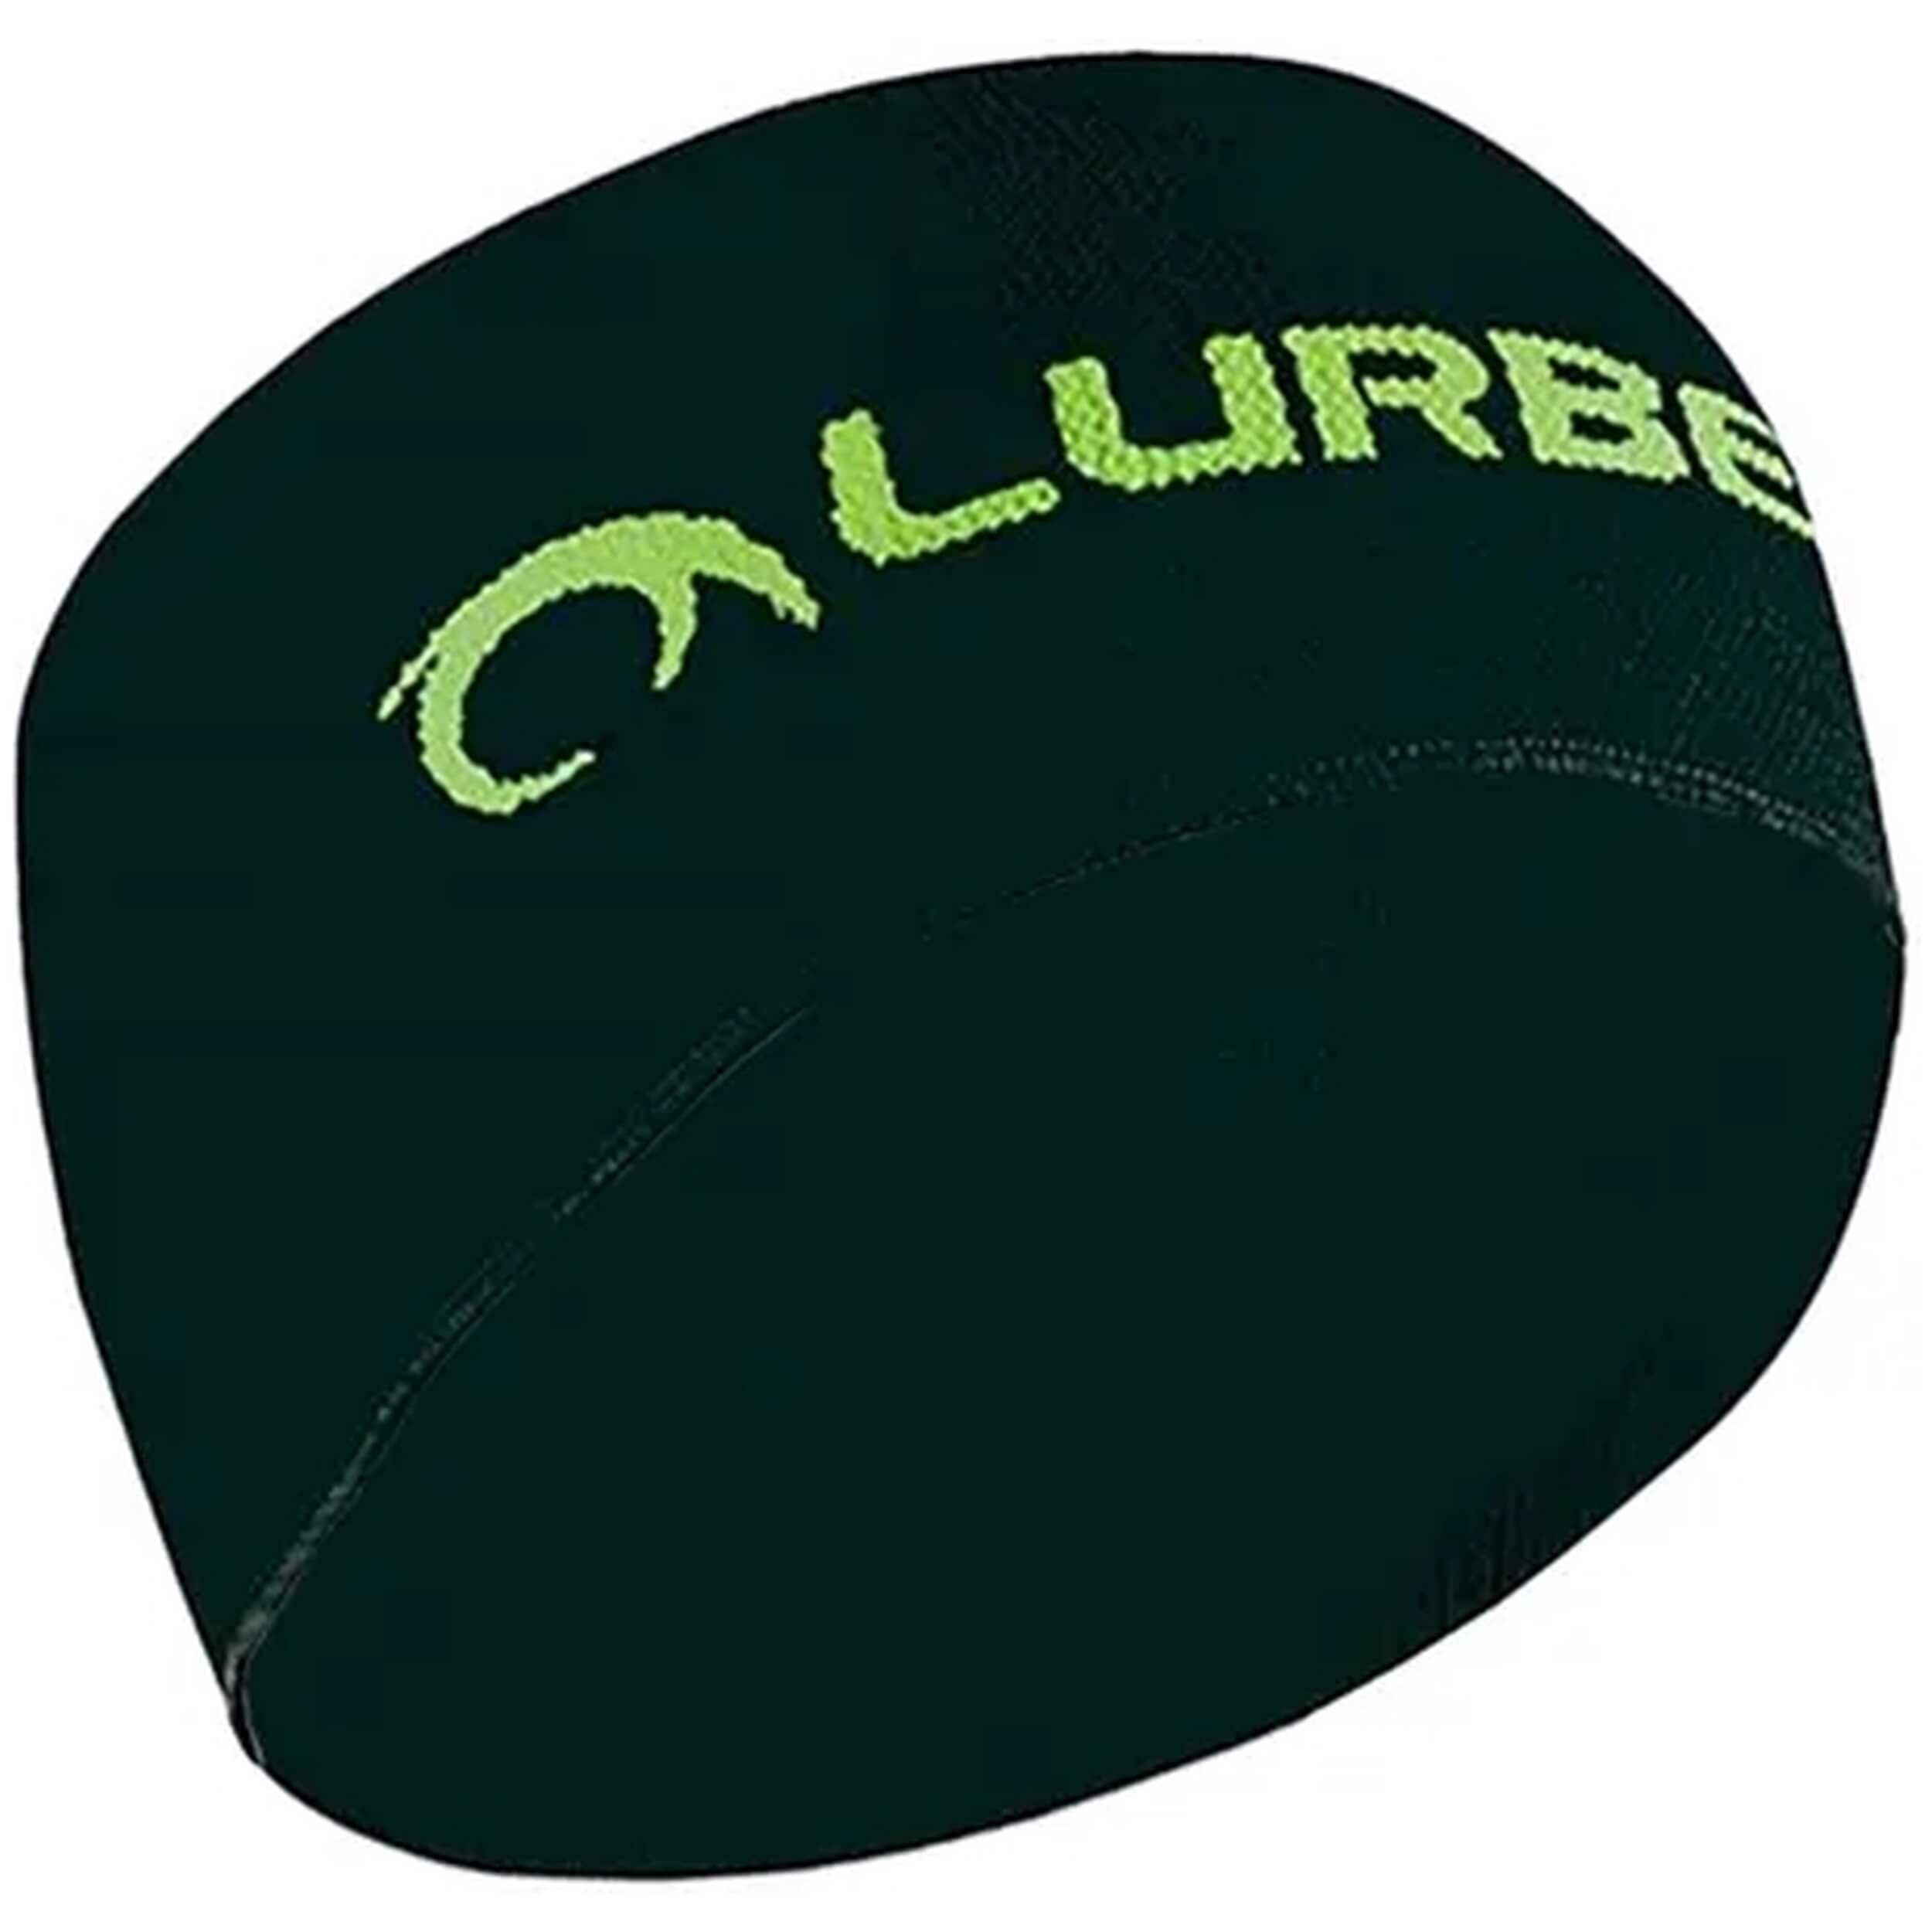 Lurbel - Textil Deporte marca Lurbel modelo 00B7.750U.0021 para unisex en color negro